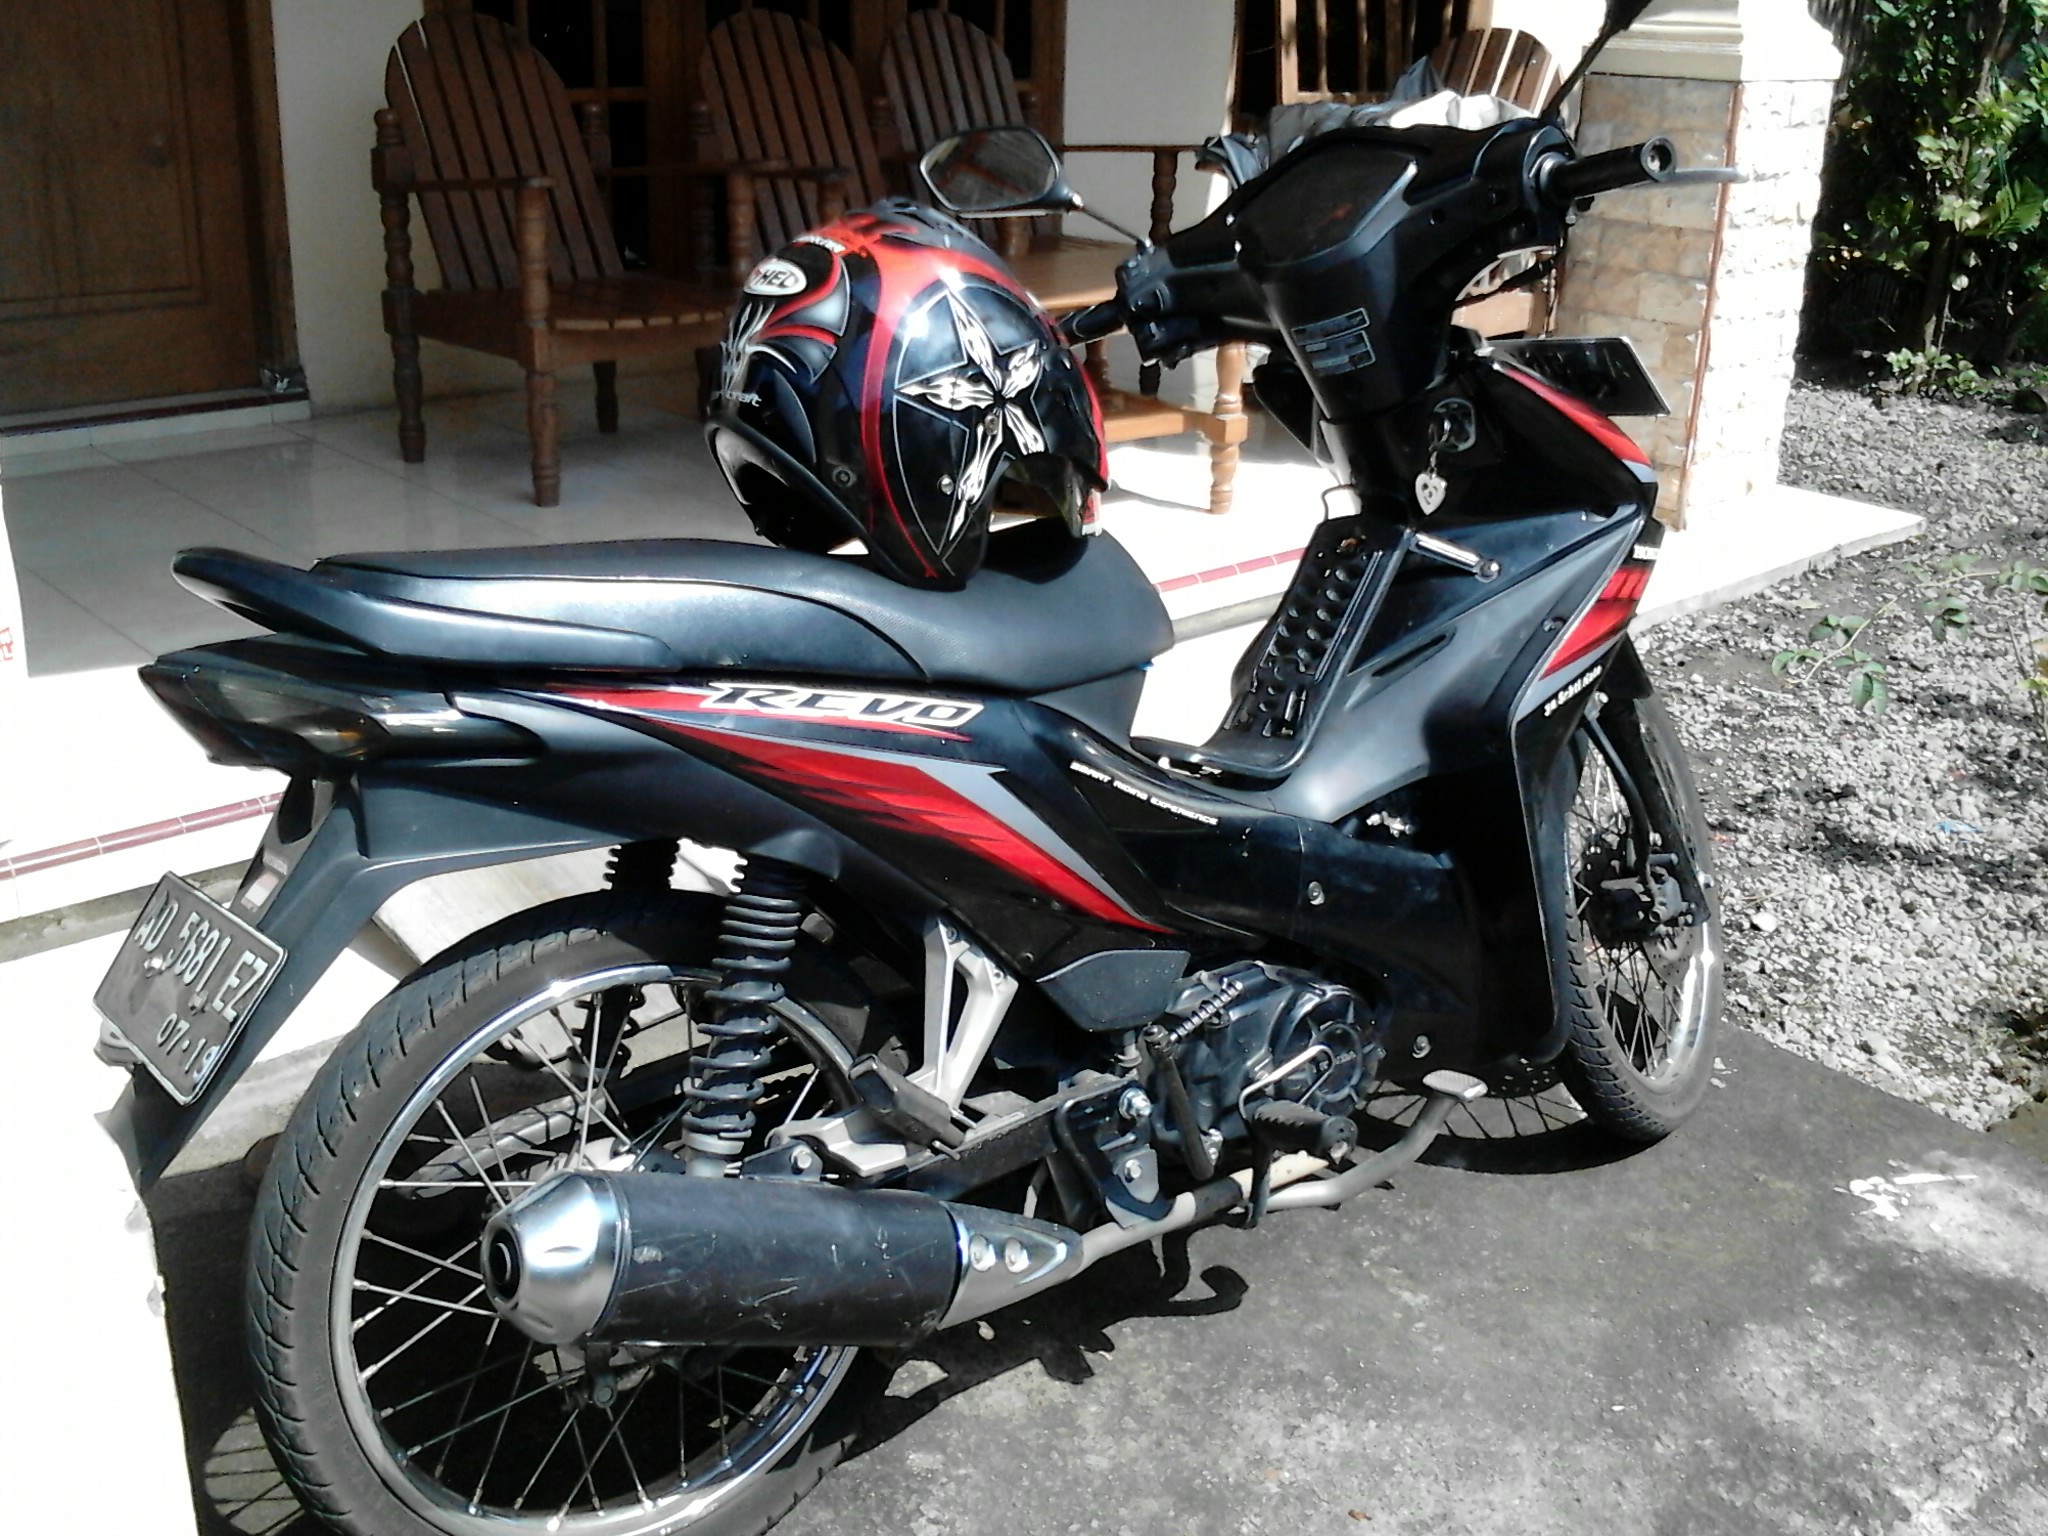 First Ride Impression Honda Absolut Revo Satuaspalcom